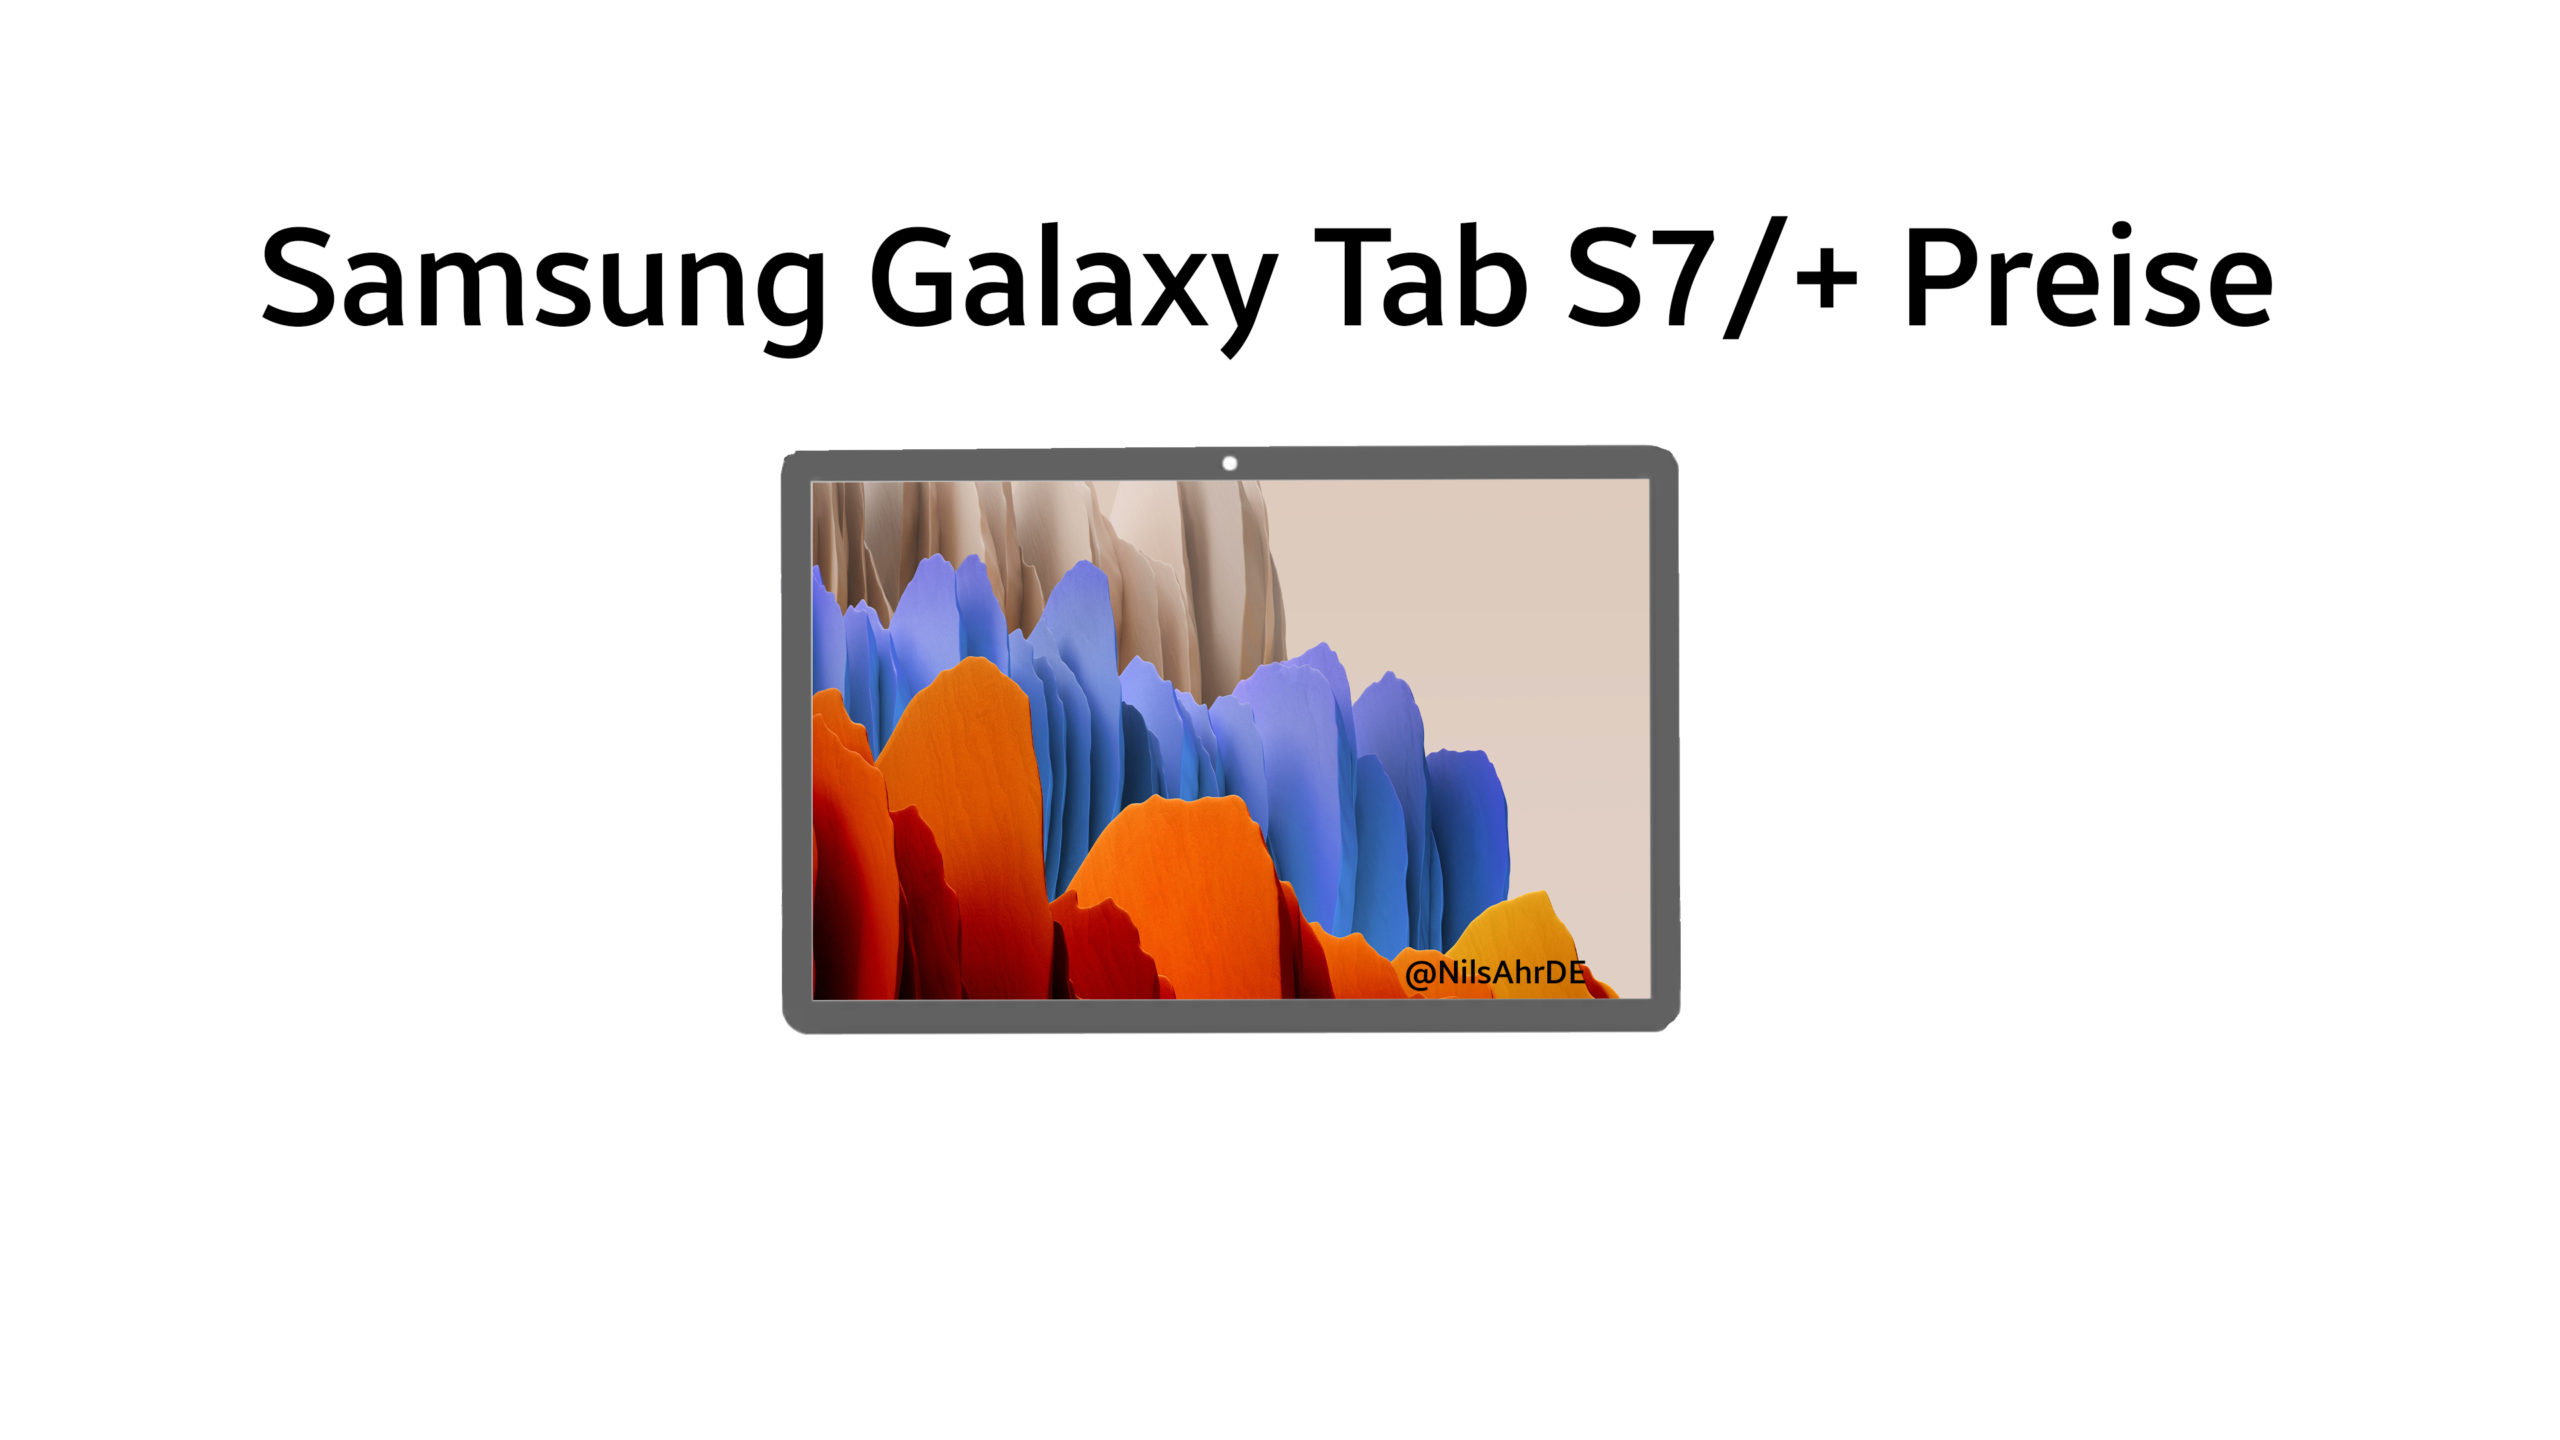 Samsung Galaxy Tab S7 prices